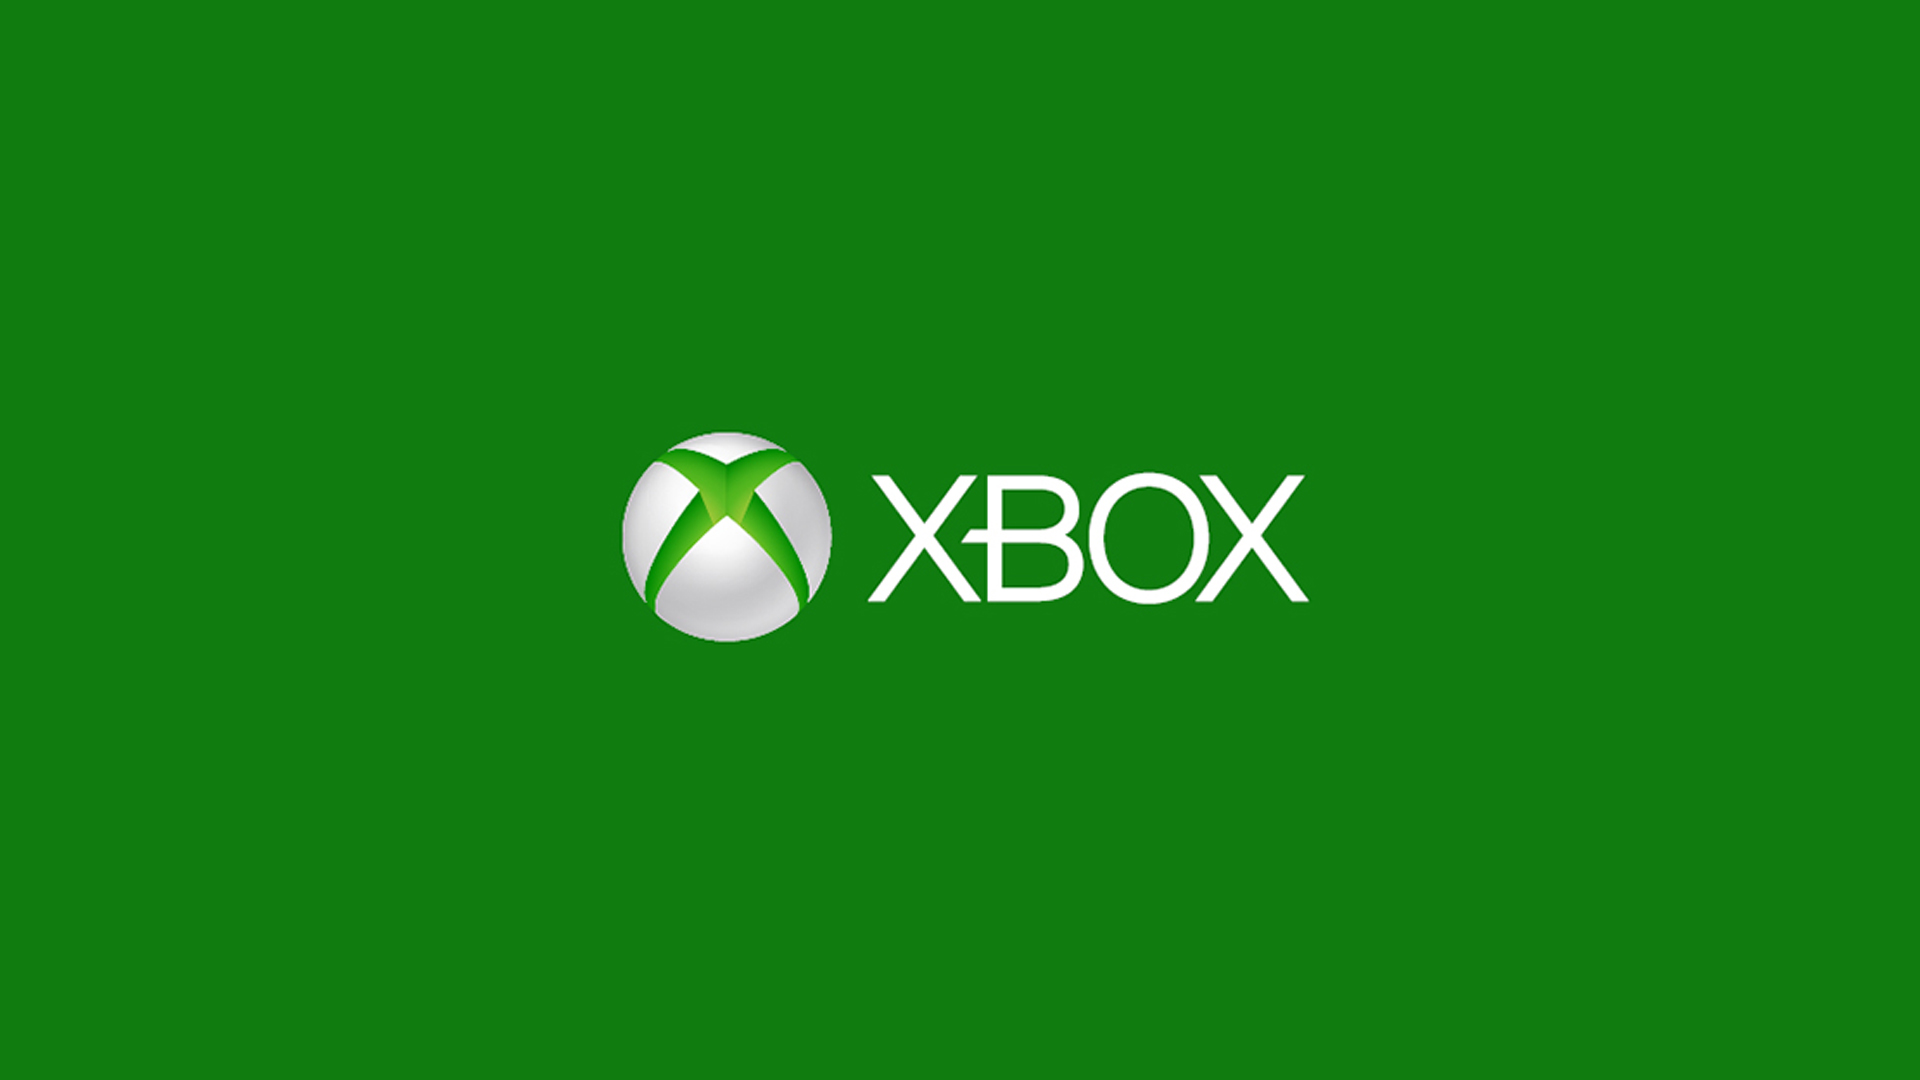 Xbox E3 2016